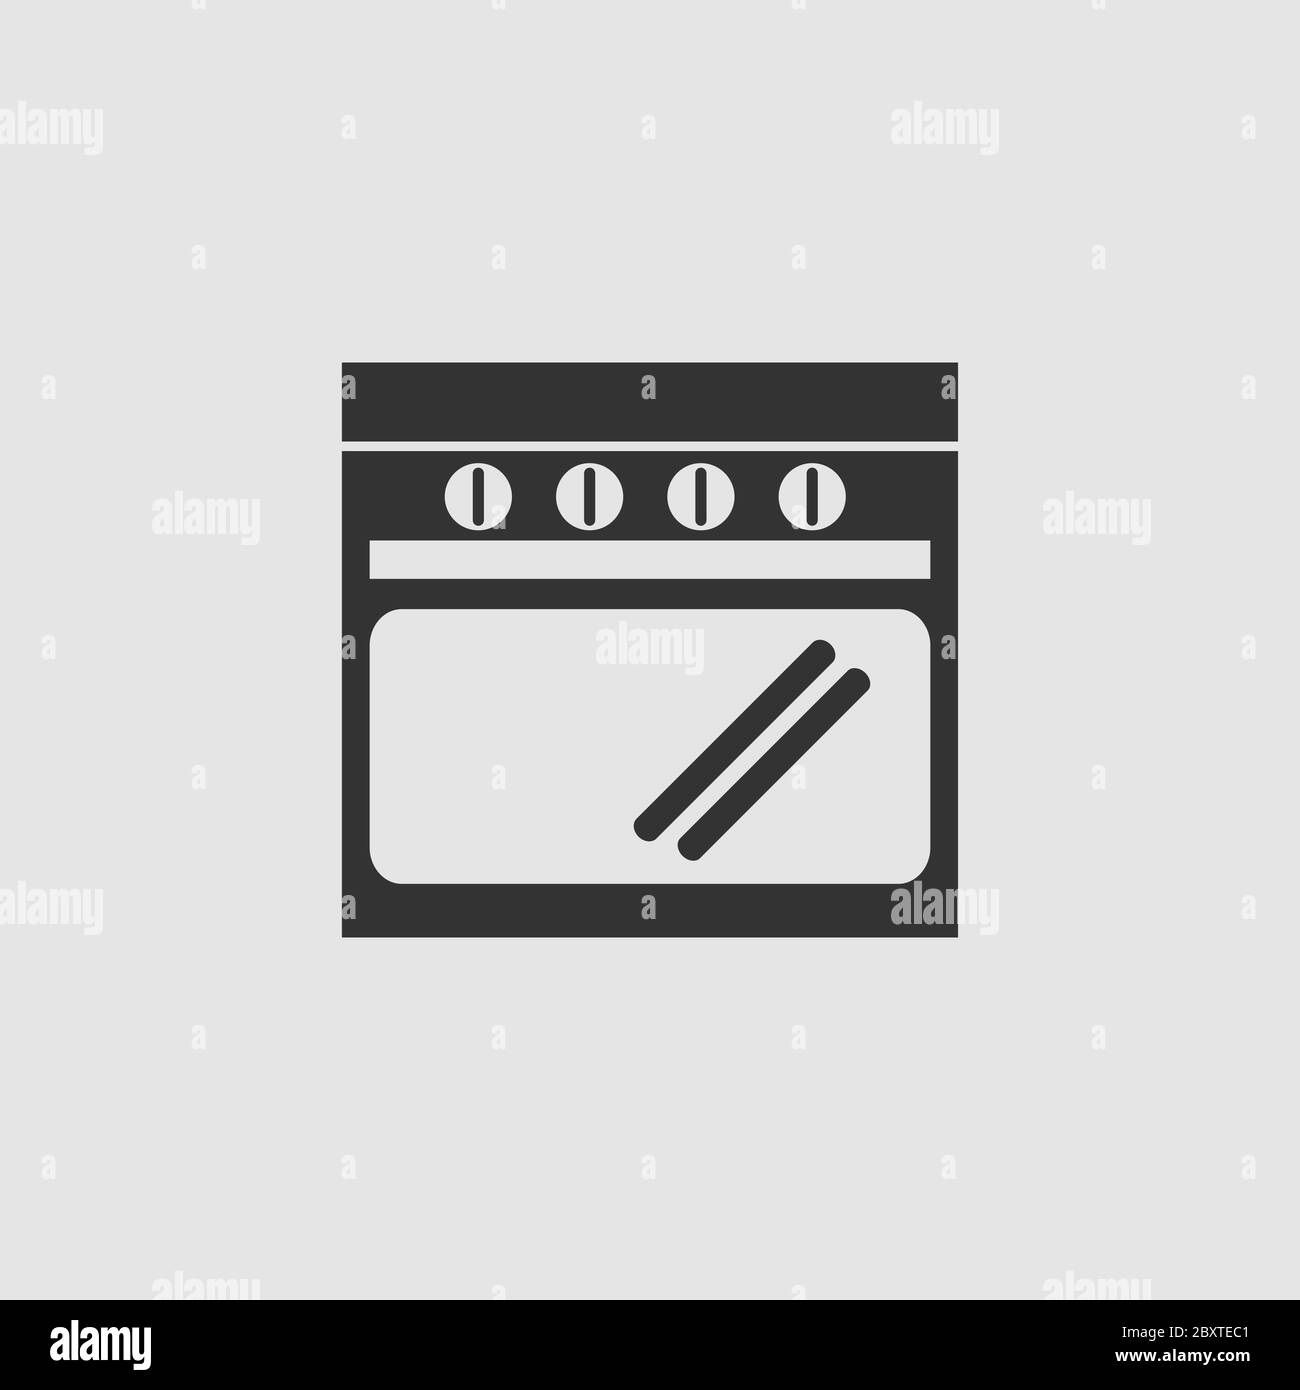 Oven icon flat. Black pictogram on grey background. Vector illustration symbol Stock Vector